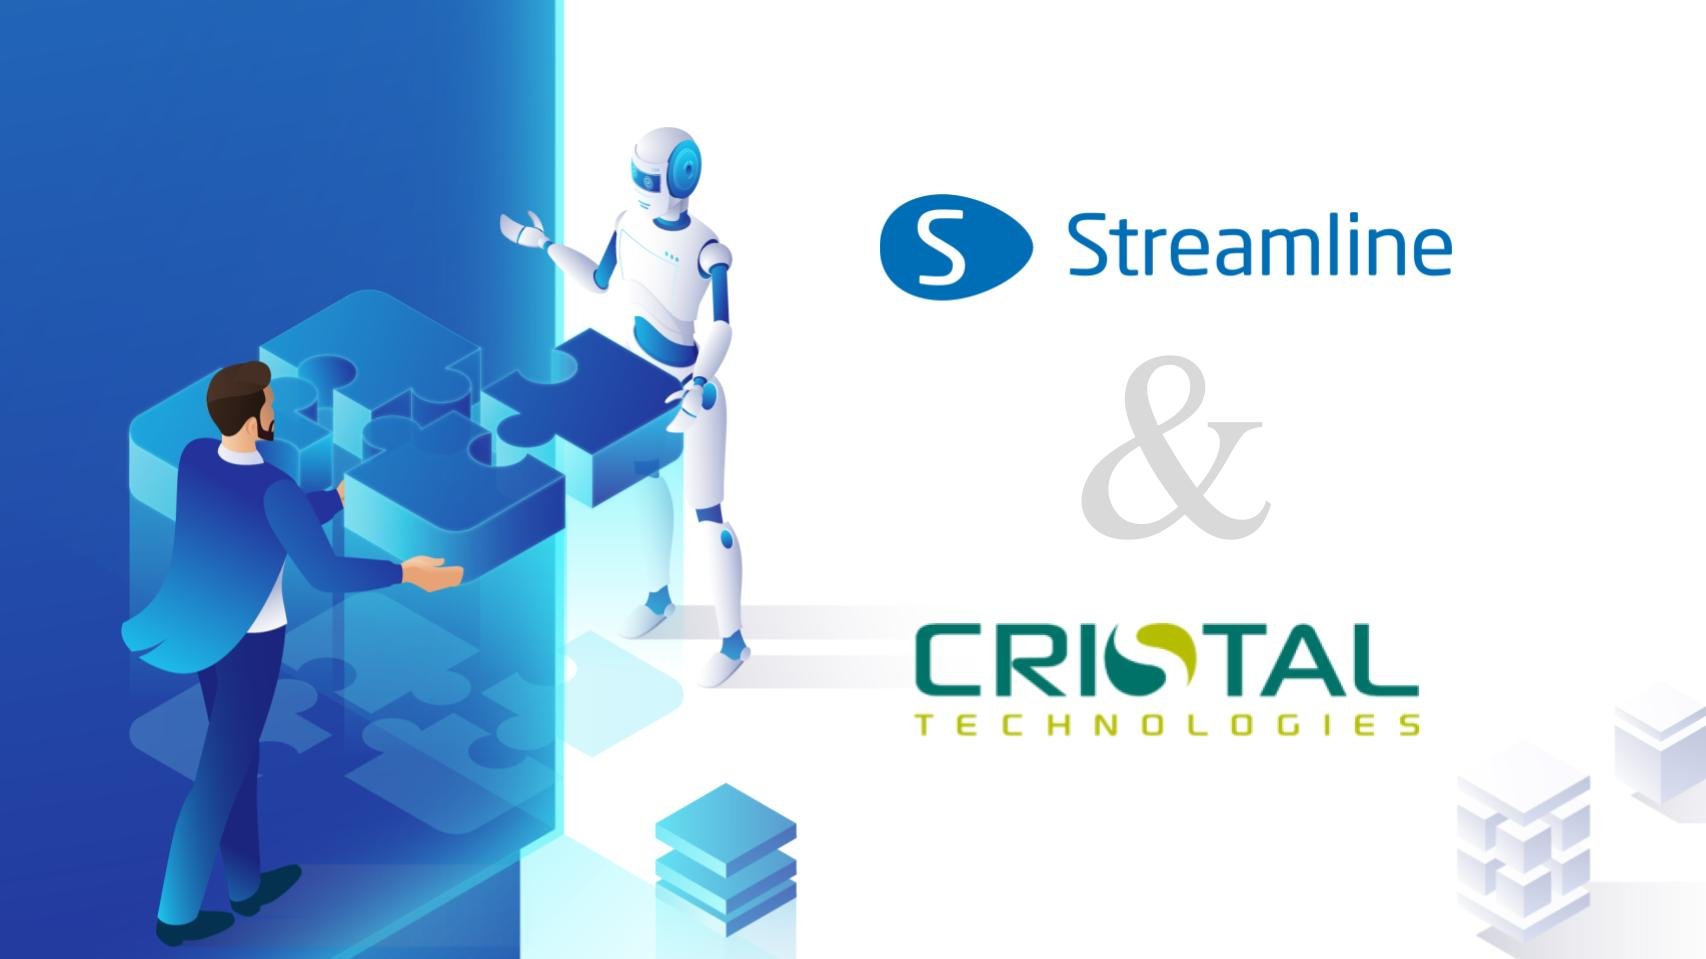 GMDH Streamline와 Cristal Technologies, 전략적 파트너십 발표